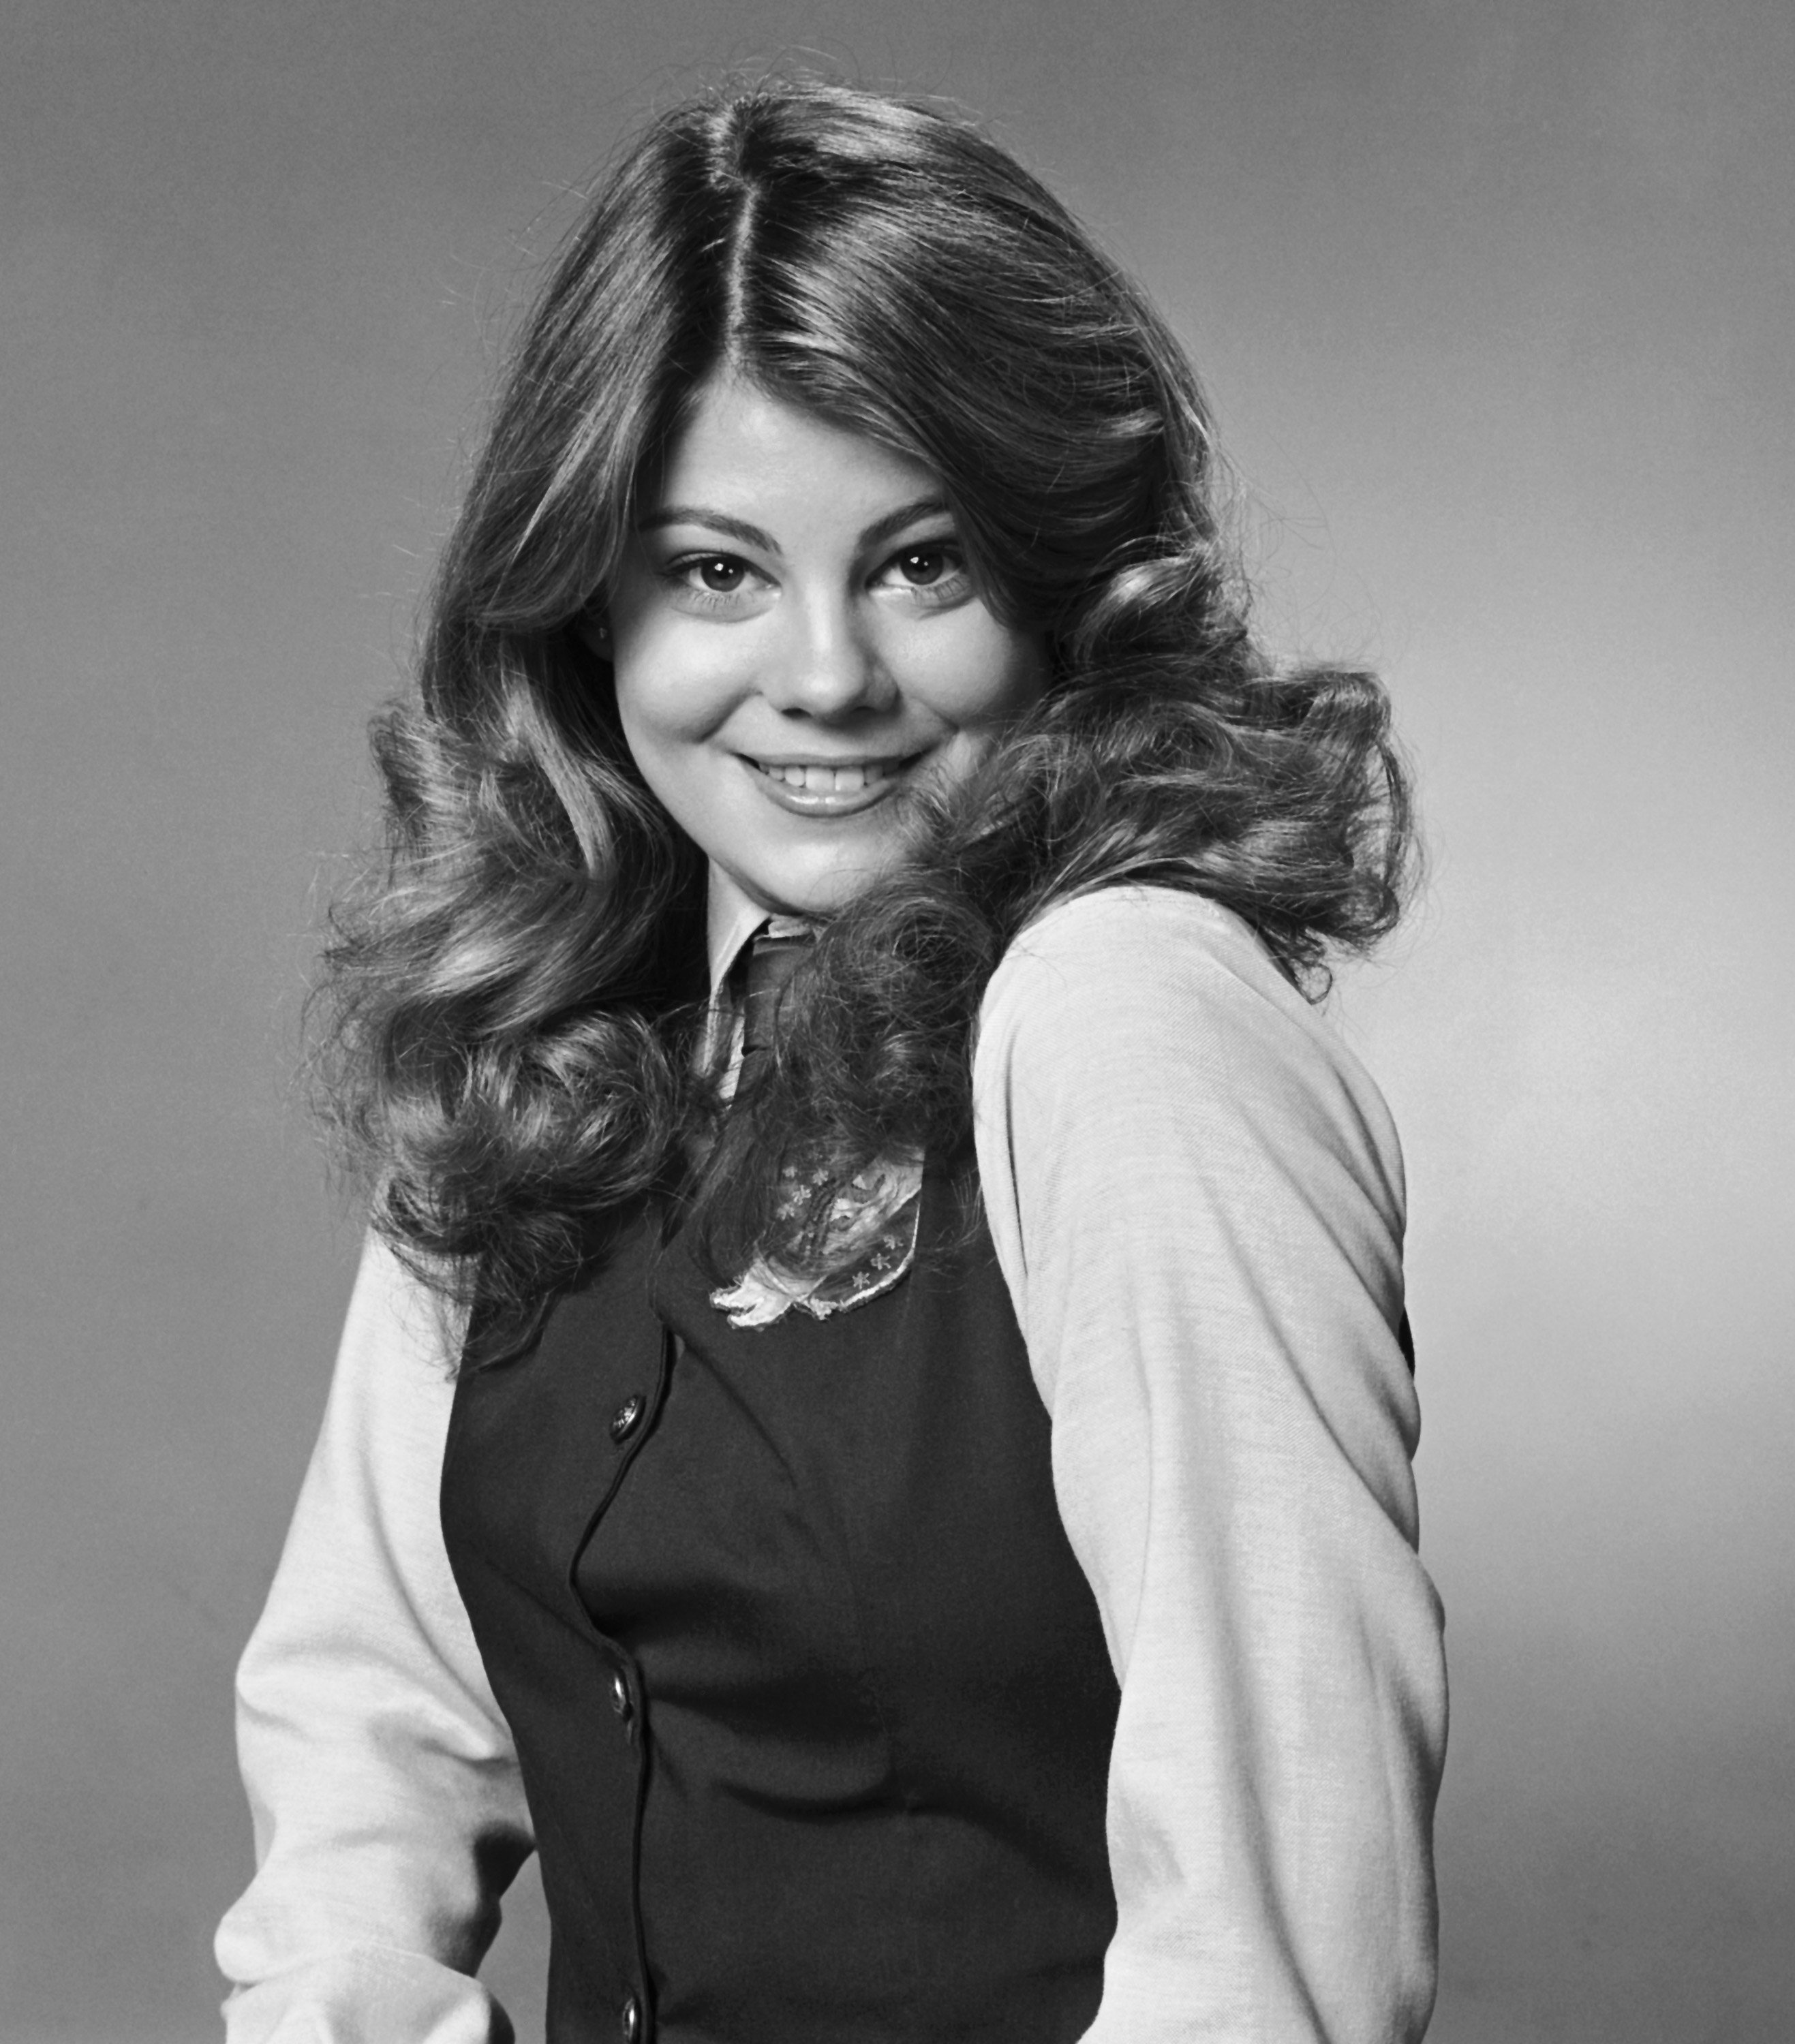 Lisa Whelchel as Blair Warner in "Facts of Life" season 1 circa 1979. | Source: Getty Images